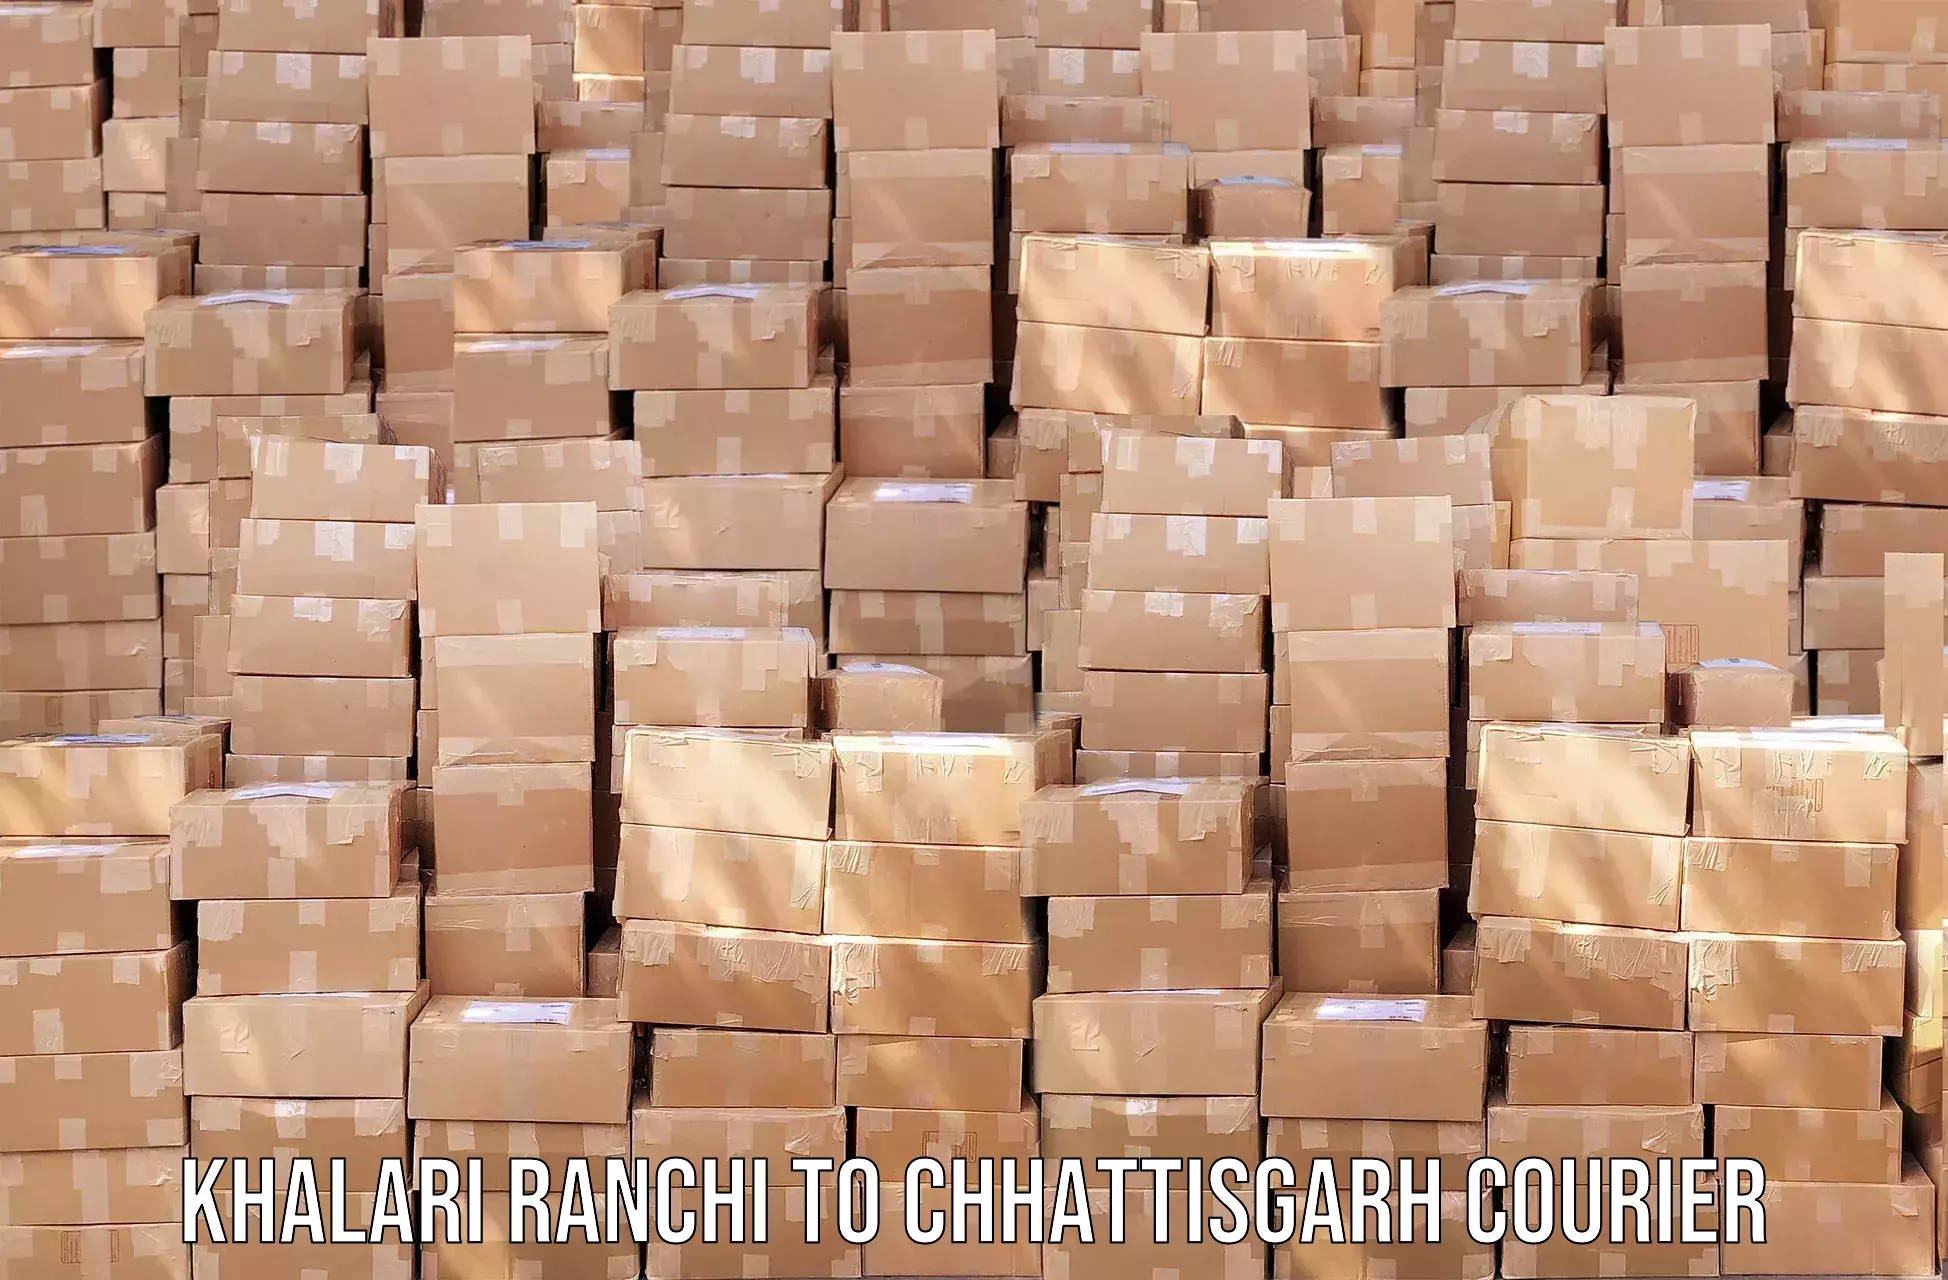 Easy access courier services Khalari Ranchi to Nagri